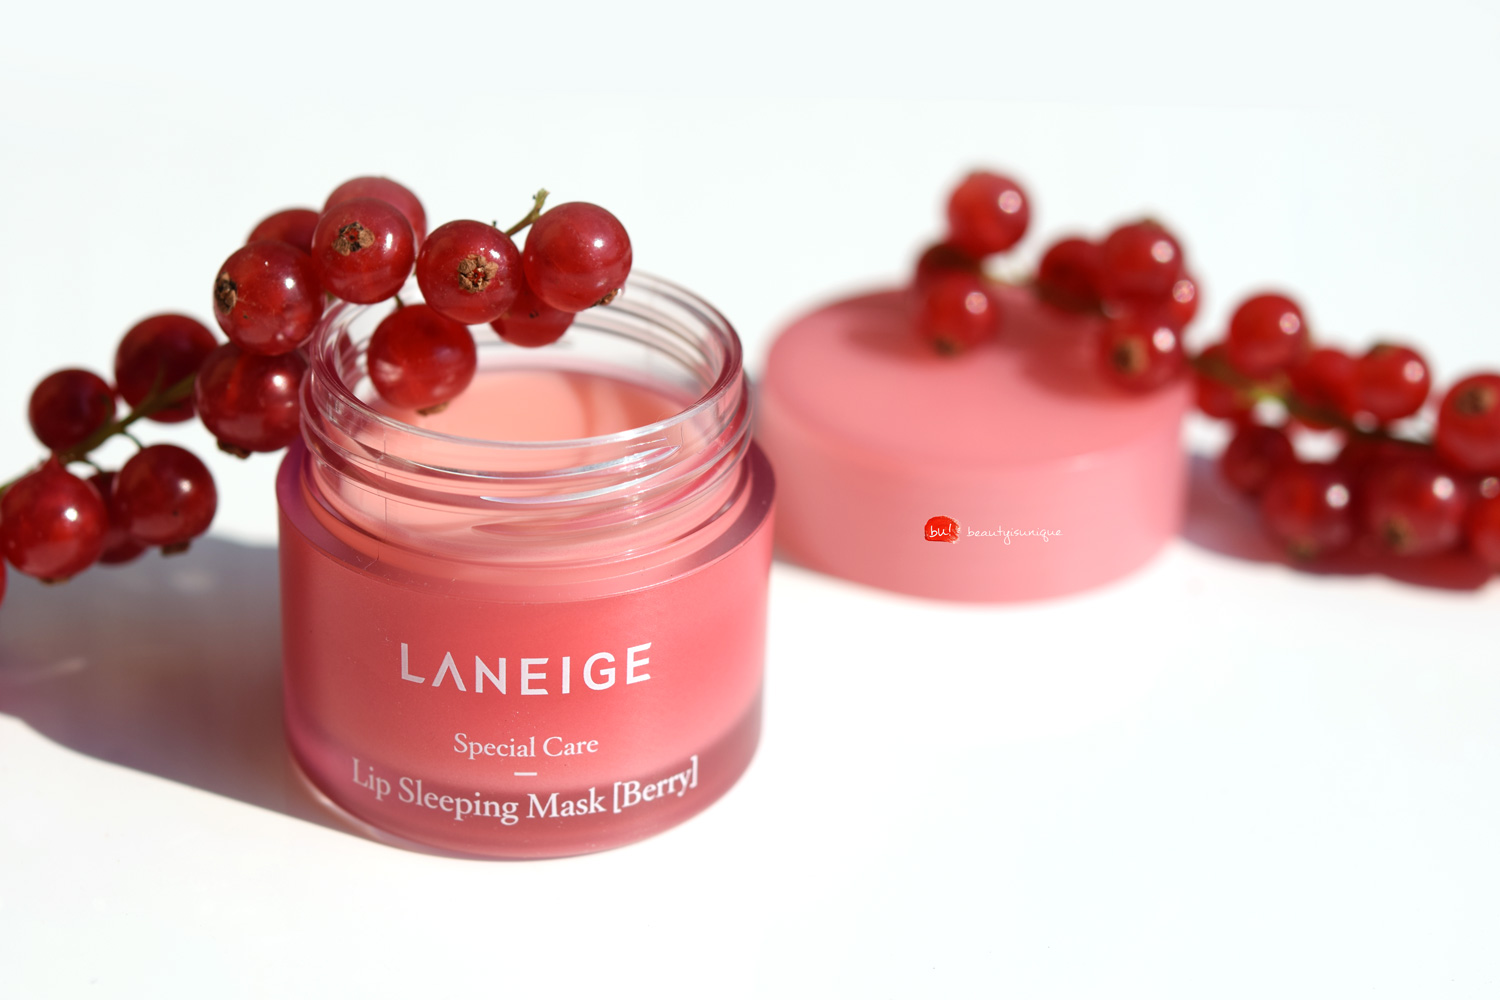 laneige-lip-sleeping-mask-berry